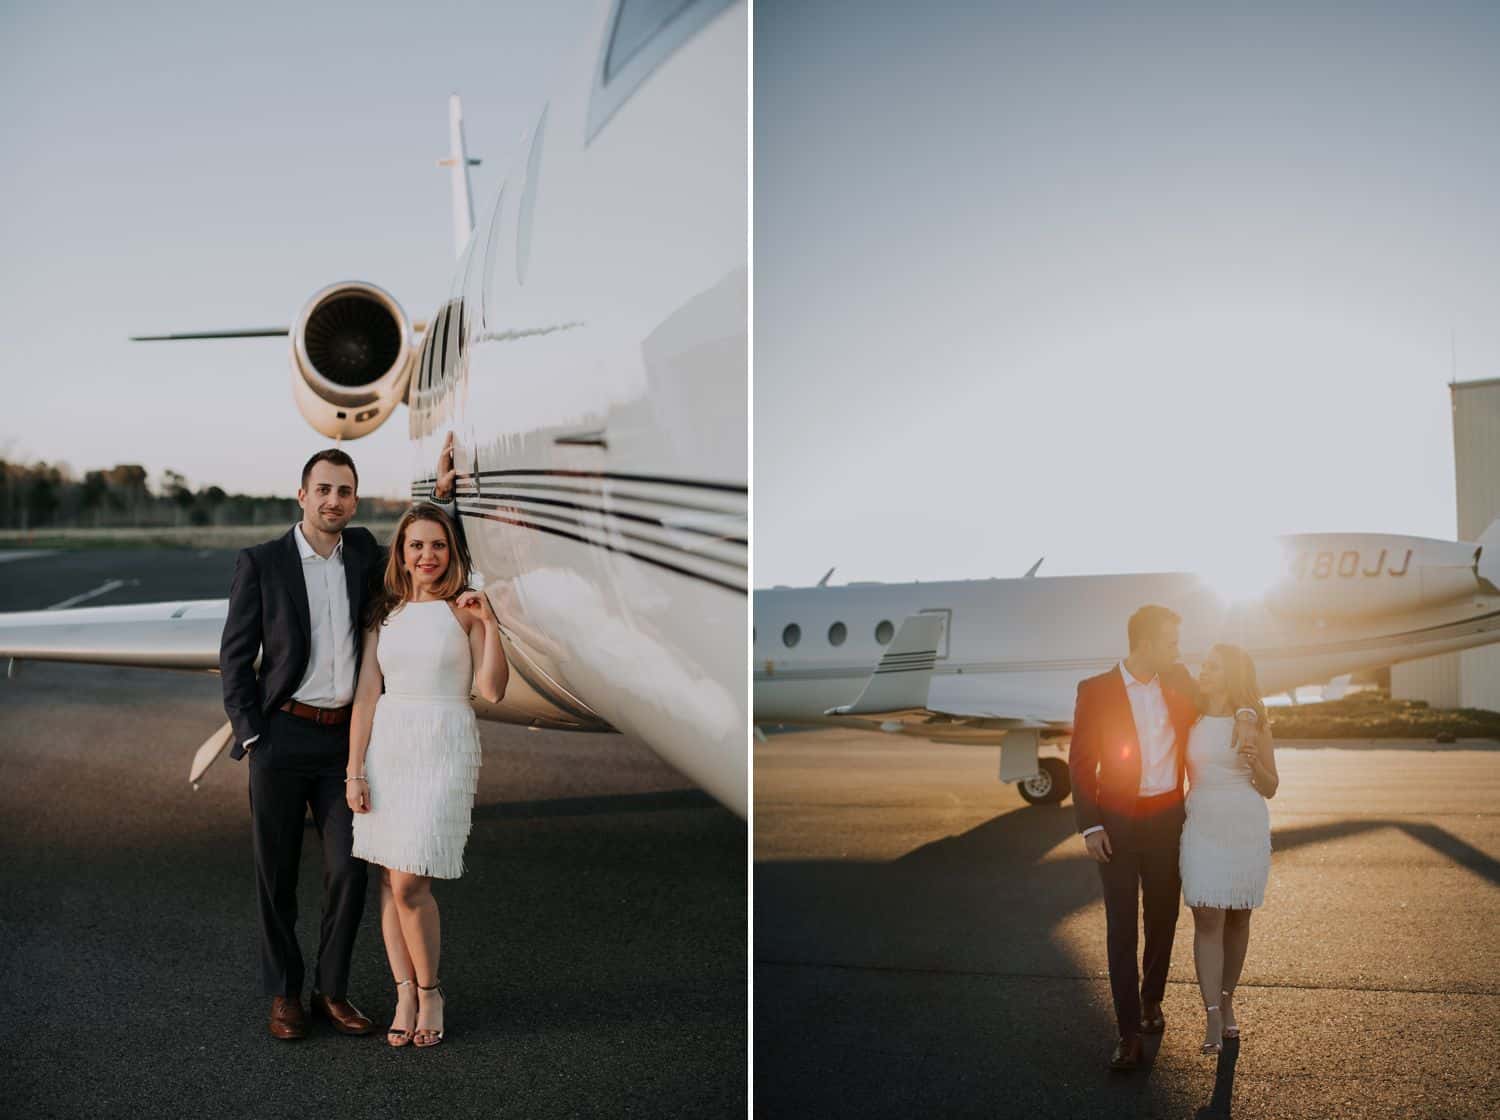 Photos of a couple posing near an airplane